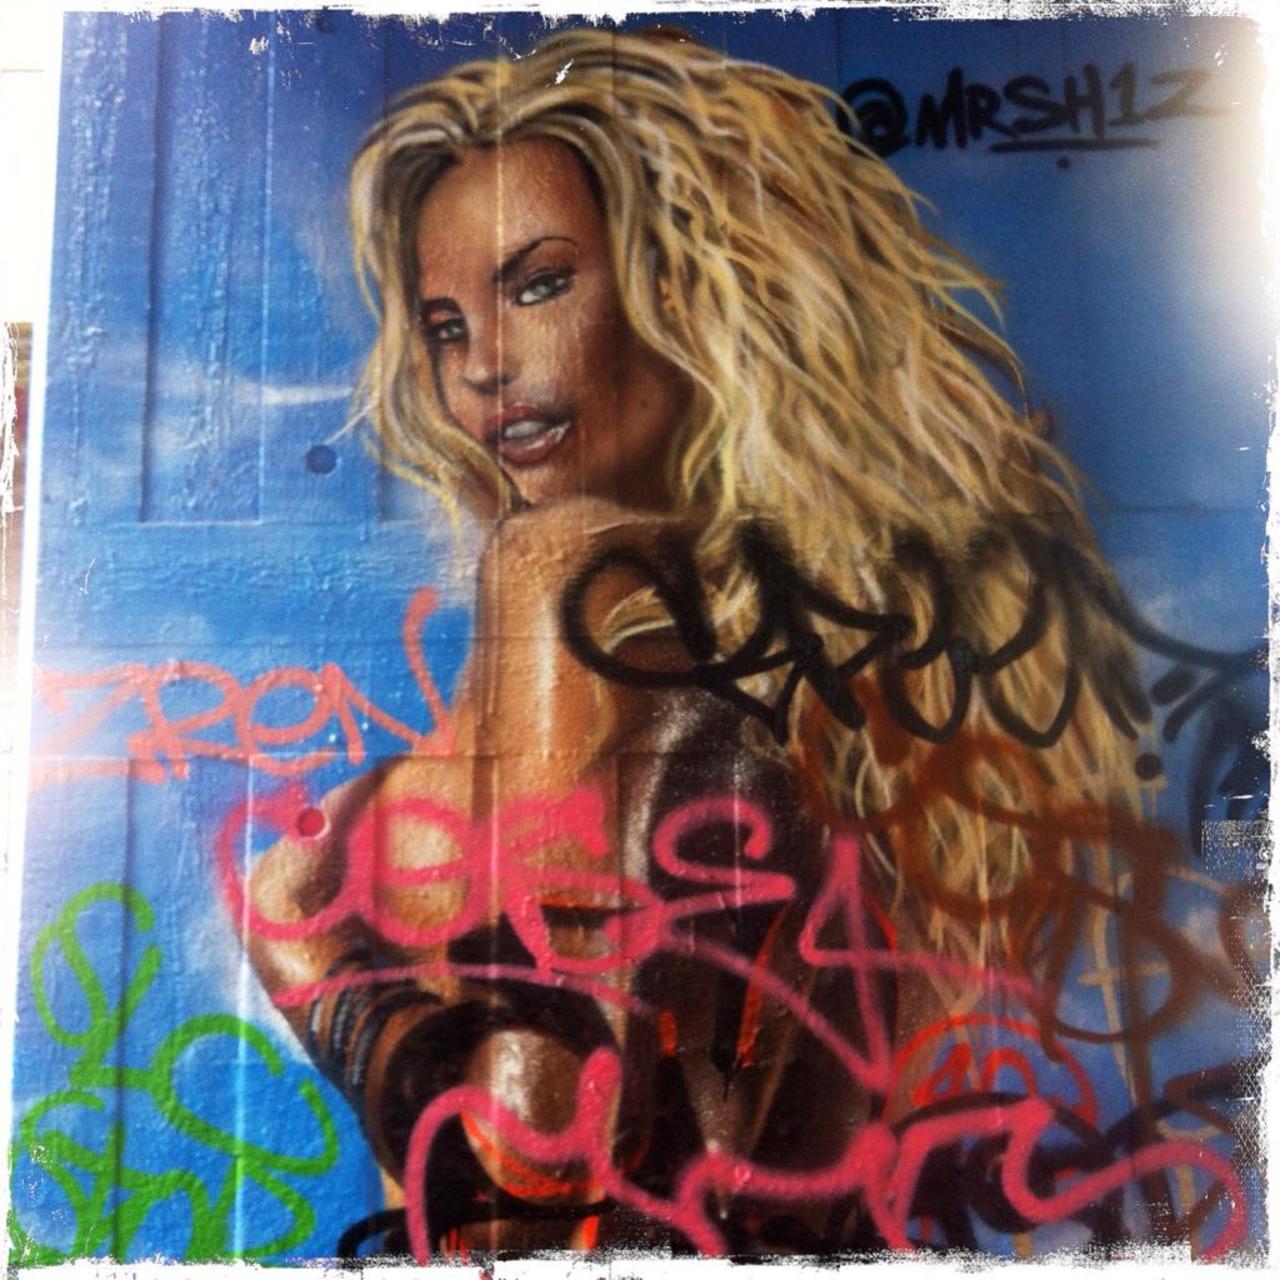 Tagged work by #MrSh1z at the skater park on the Southbank #art #streetart #graffiti http://t.co/MwNom6lpoq